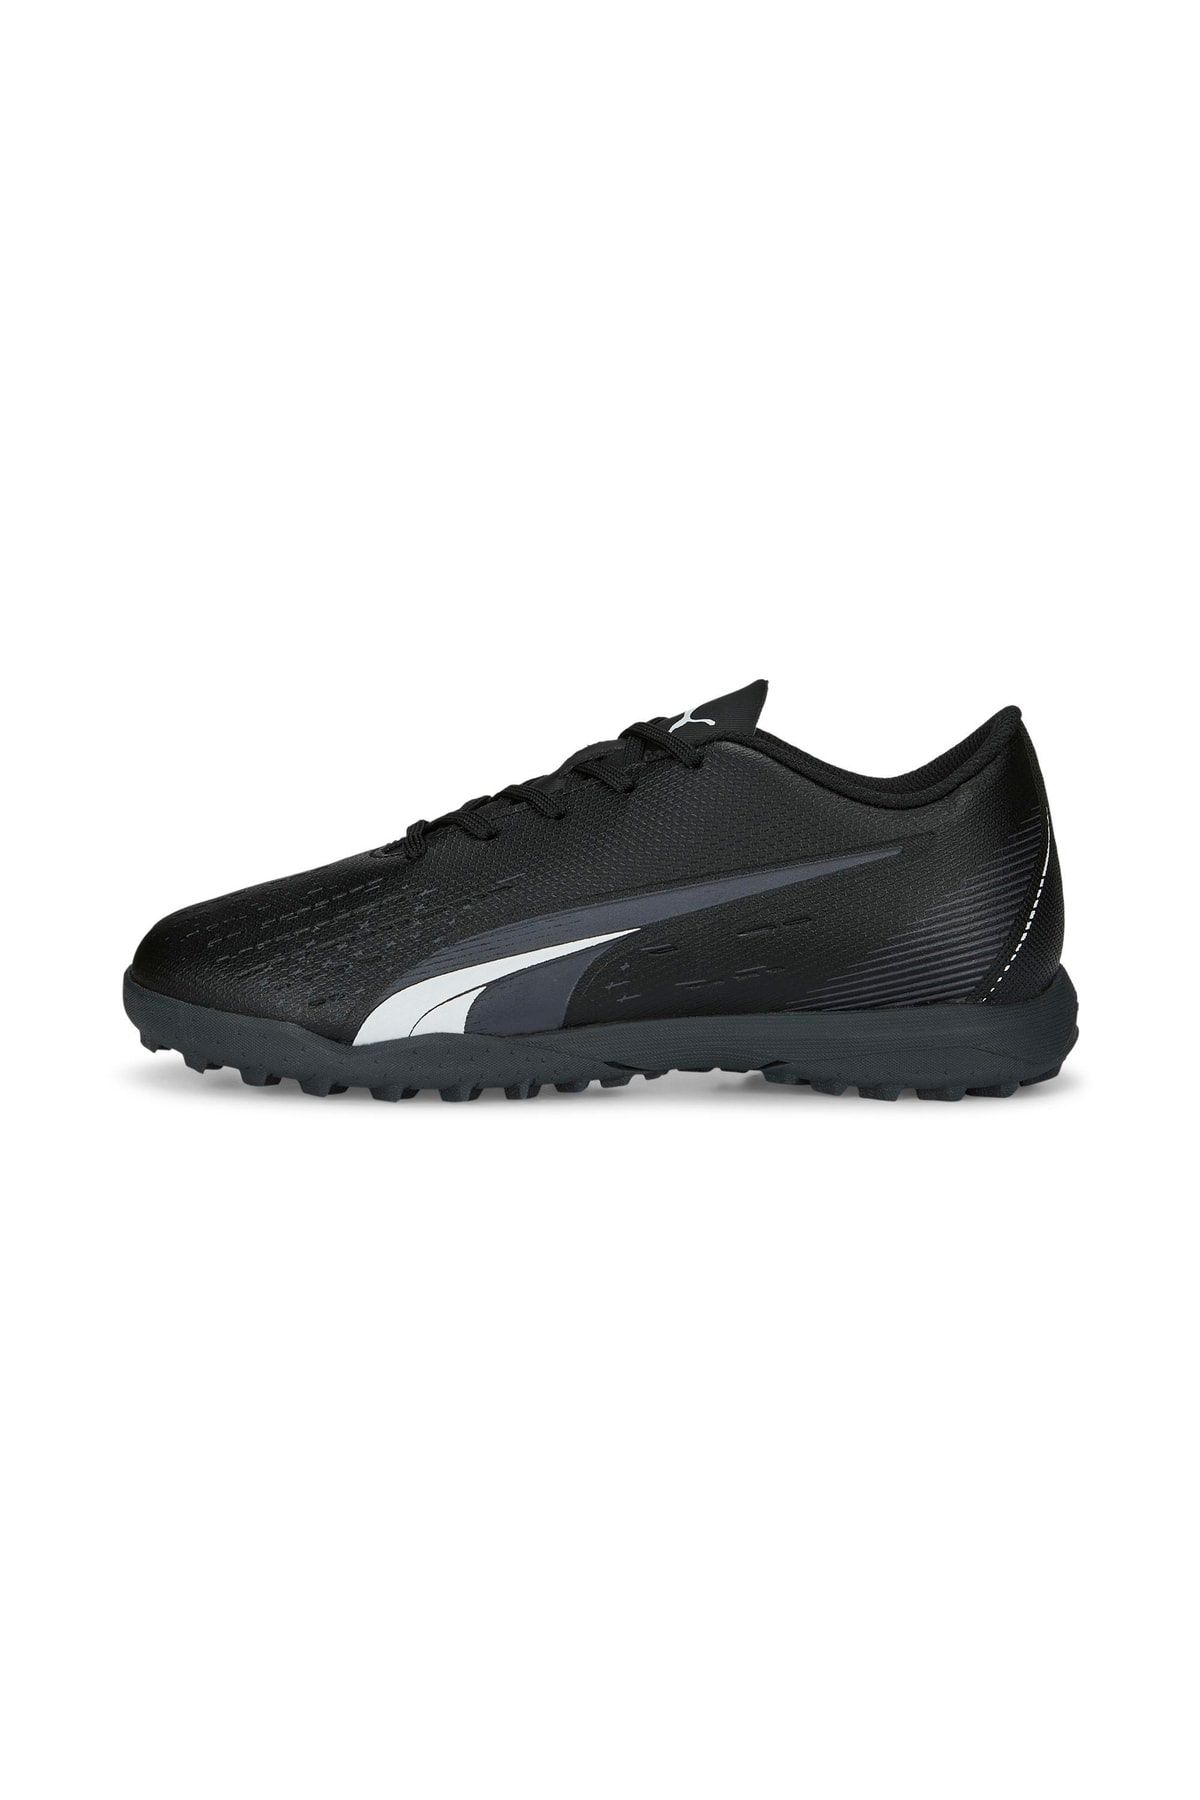 Puma Ultra Play Tt Jr - Siyah Halı Saha Ayakkabısı